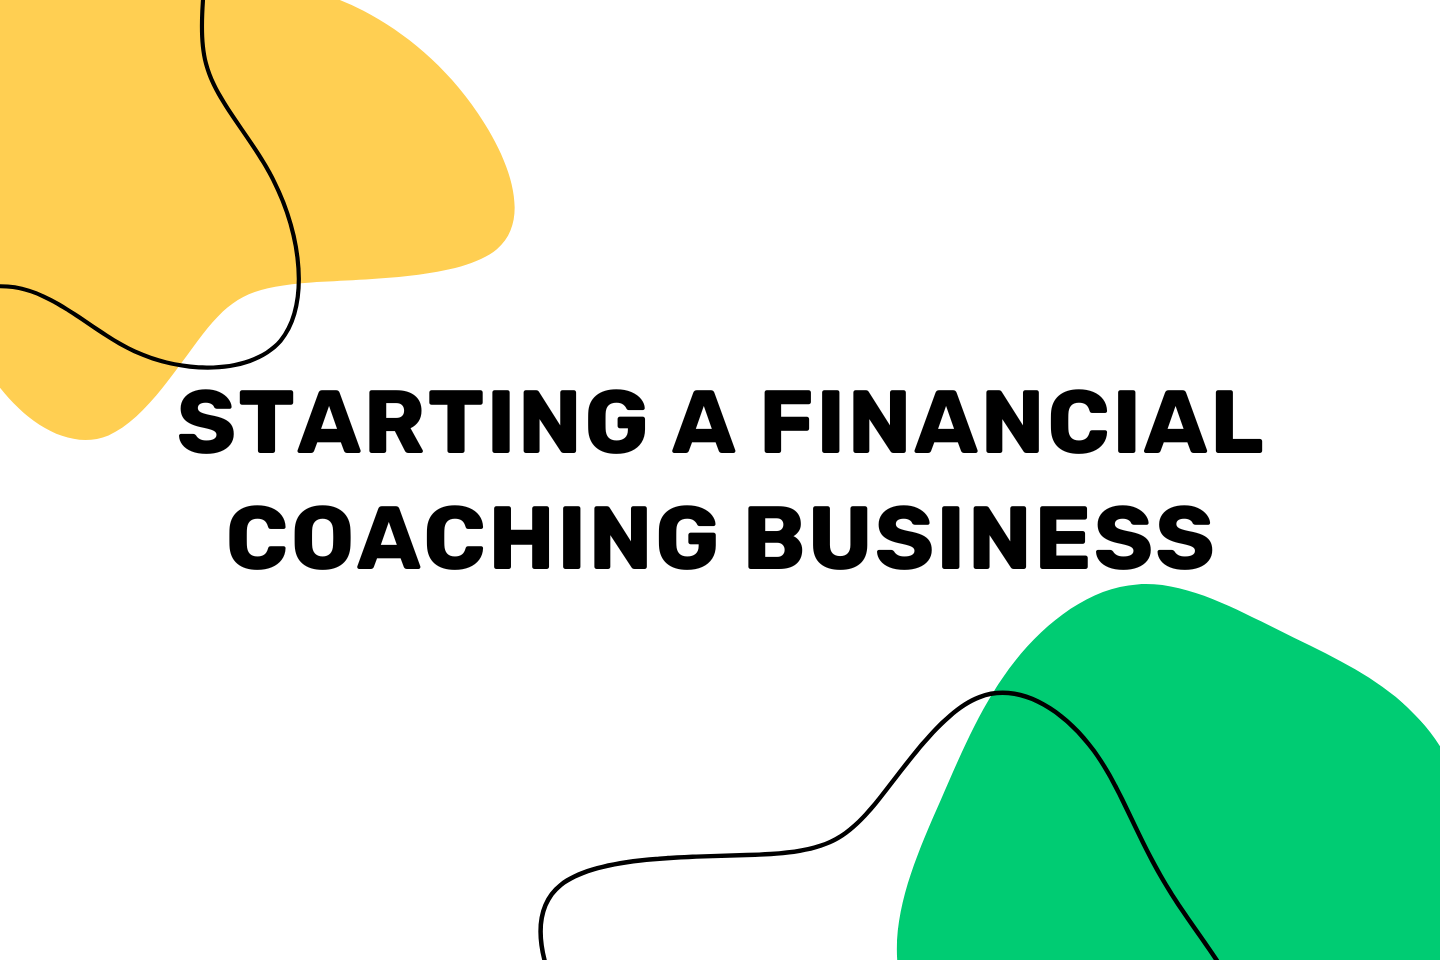 Consider Starting a Financial Coaching Business